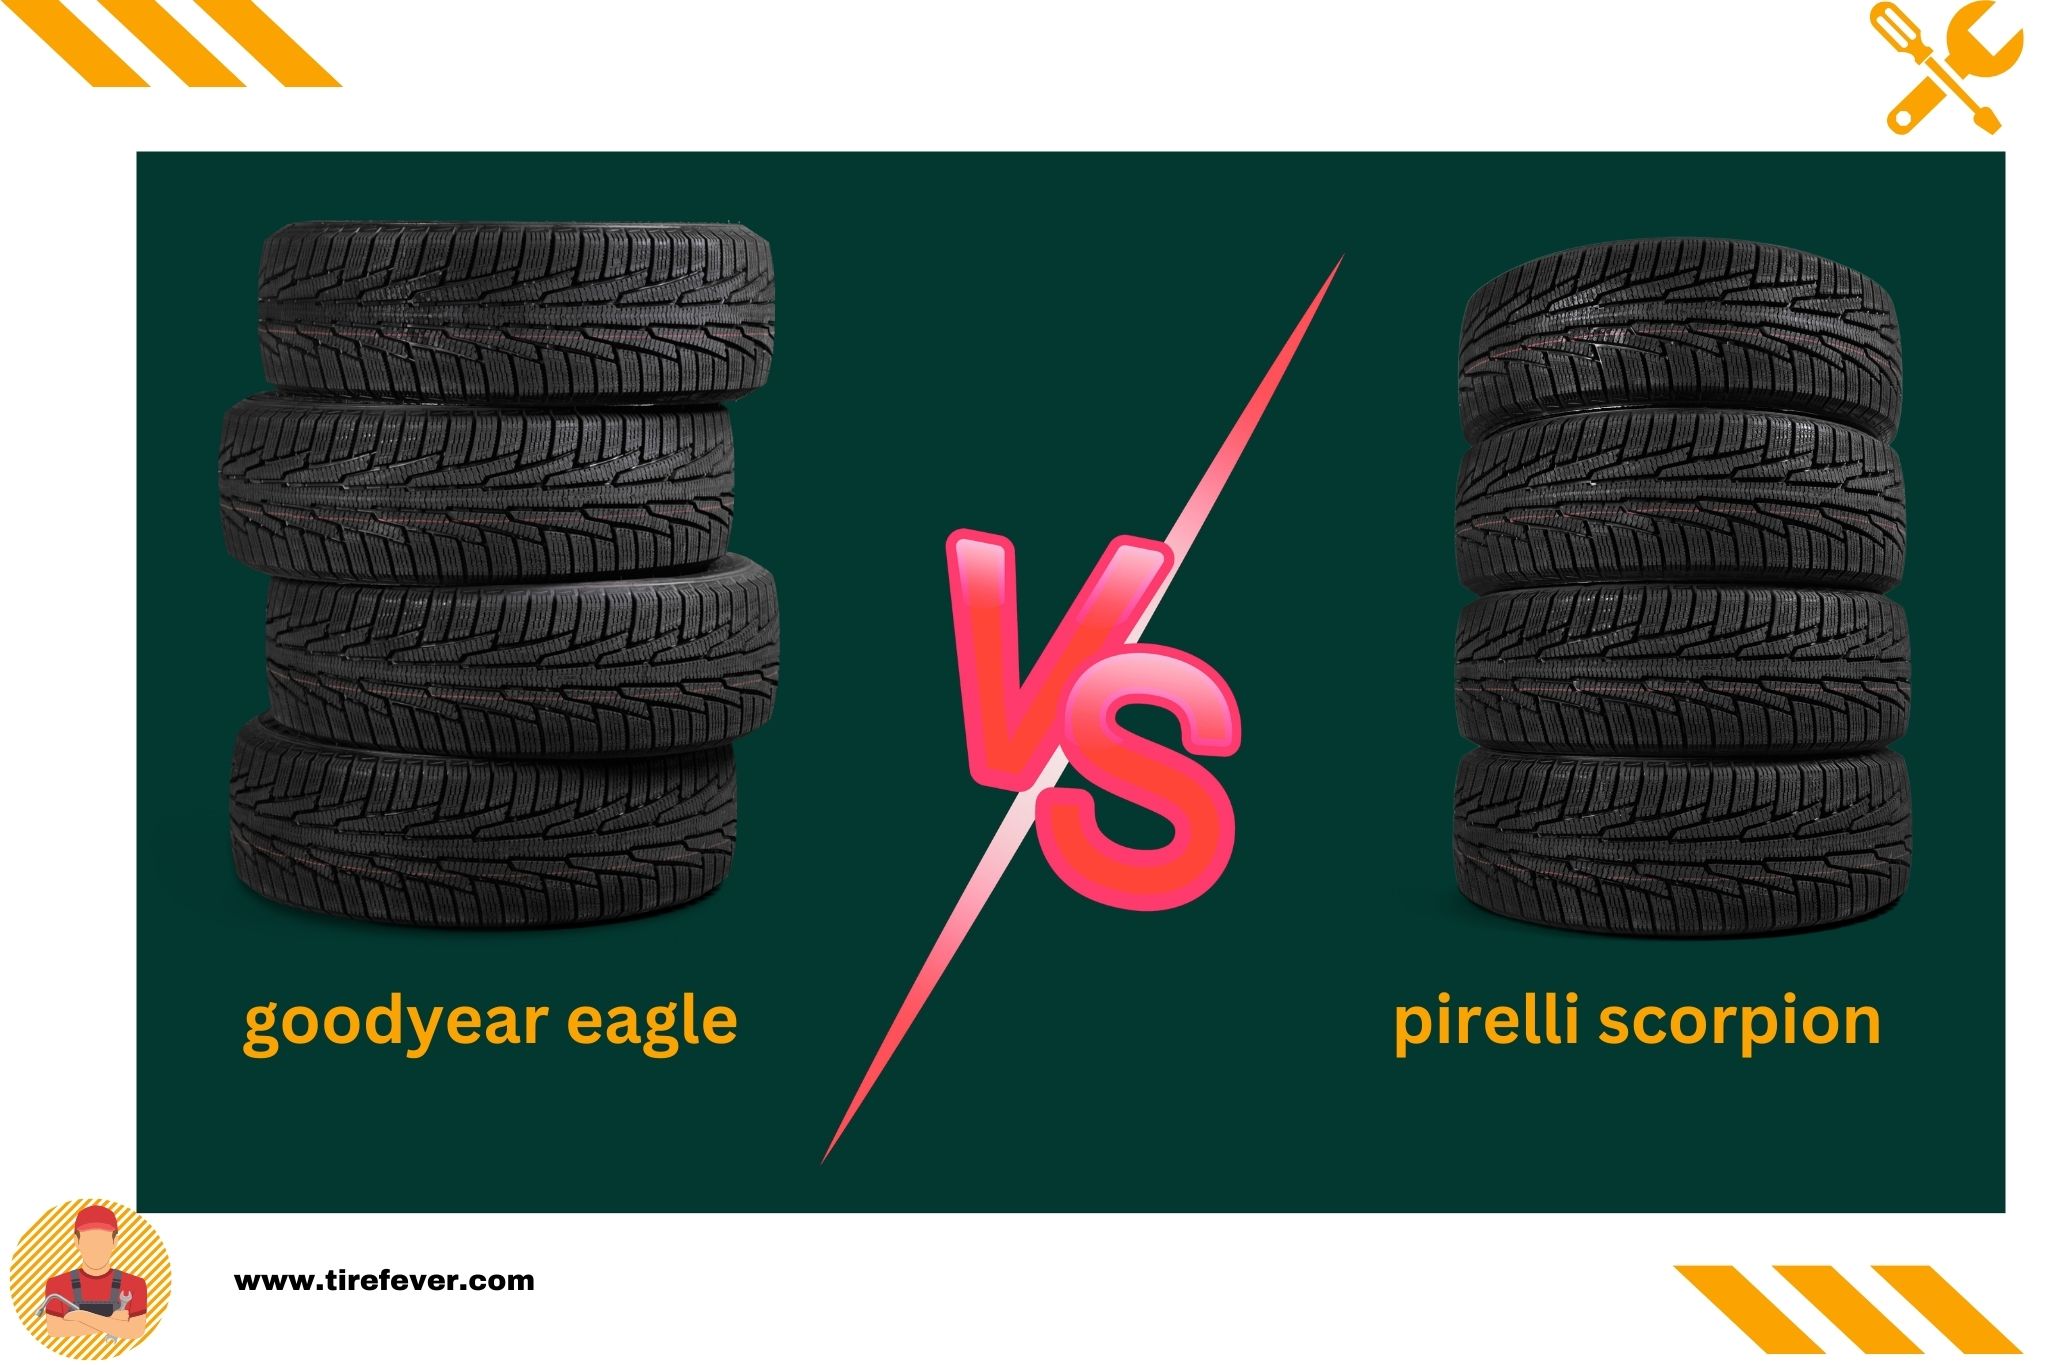 goodyear eagle vs pirelli scorpion